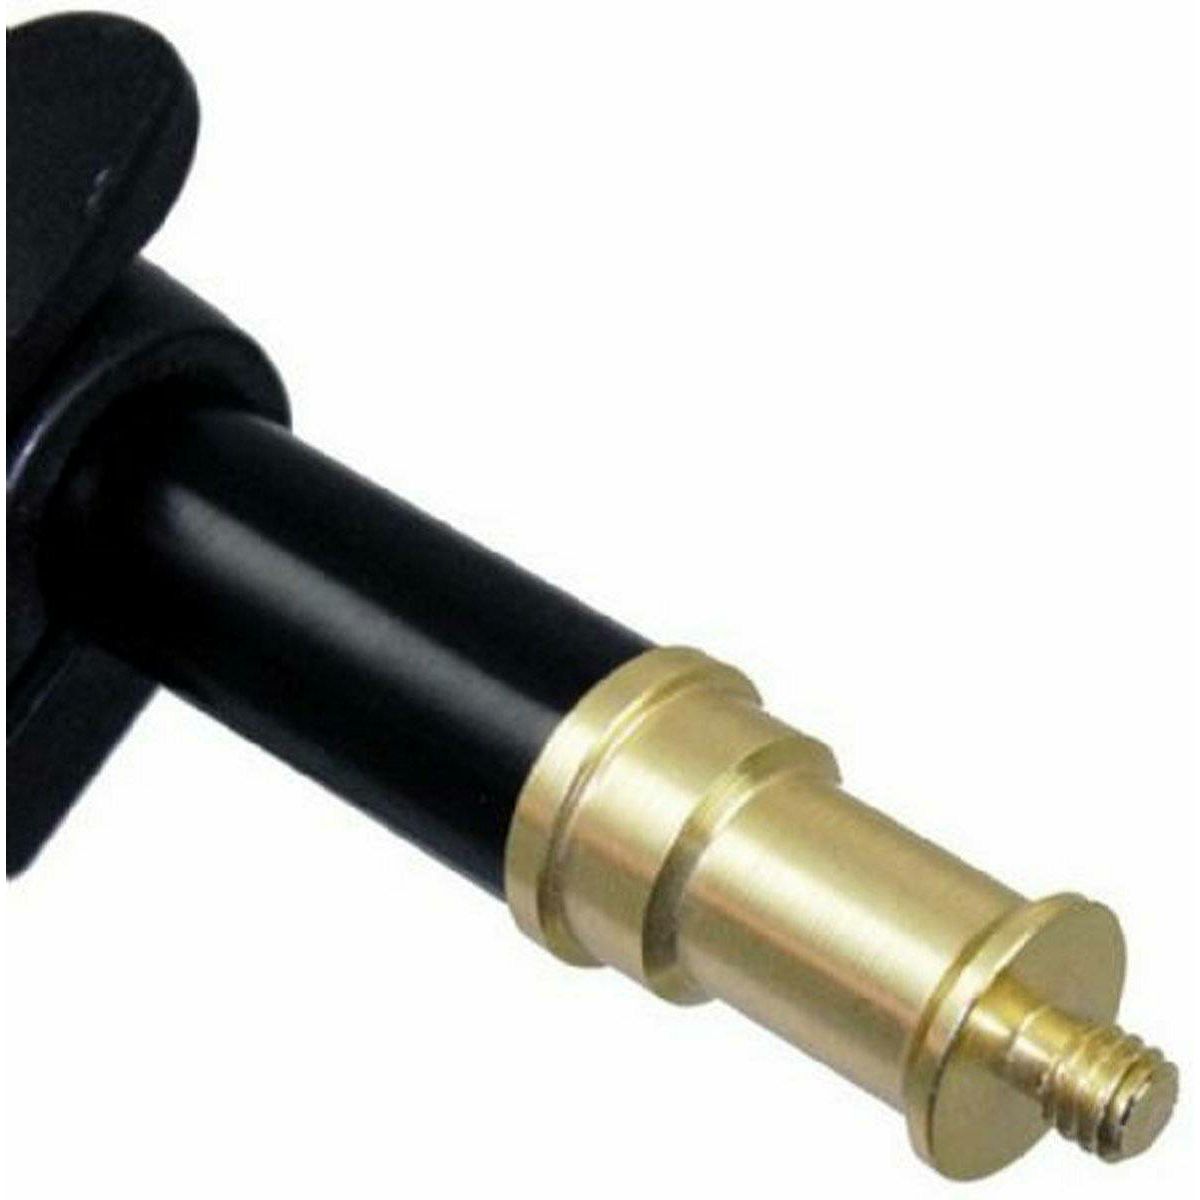 StudioKing Boompole Stick LBPS-158 Telescopic Retractable Extension Arm with Handle 63-158cm teleskopski štap za bljeskalice, mikrofone i rasvjetu